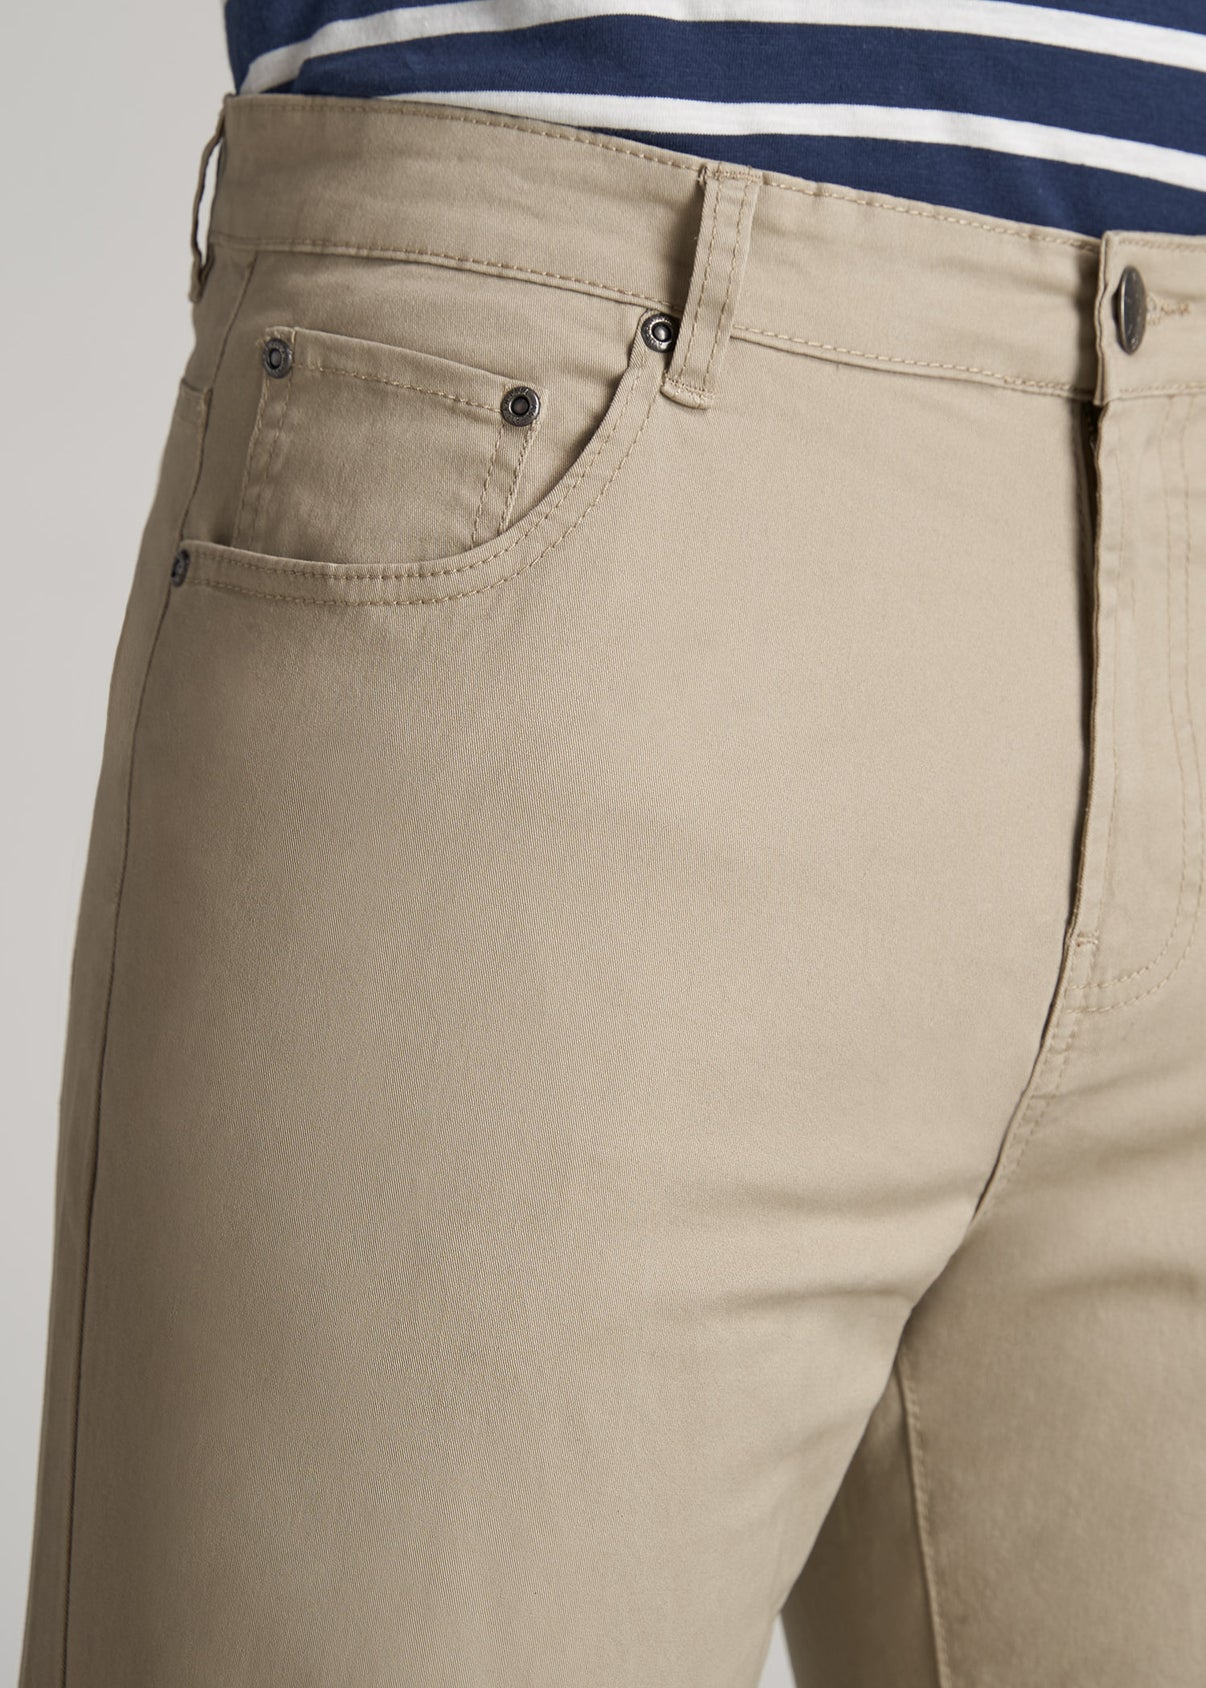 J1 Straight Leg Five-Pocket Pants for Tall Men | American Tall